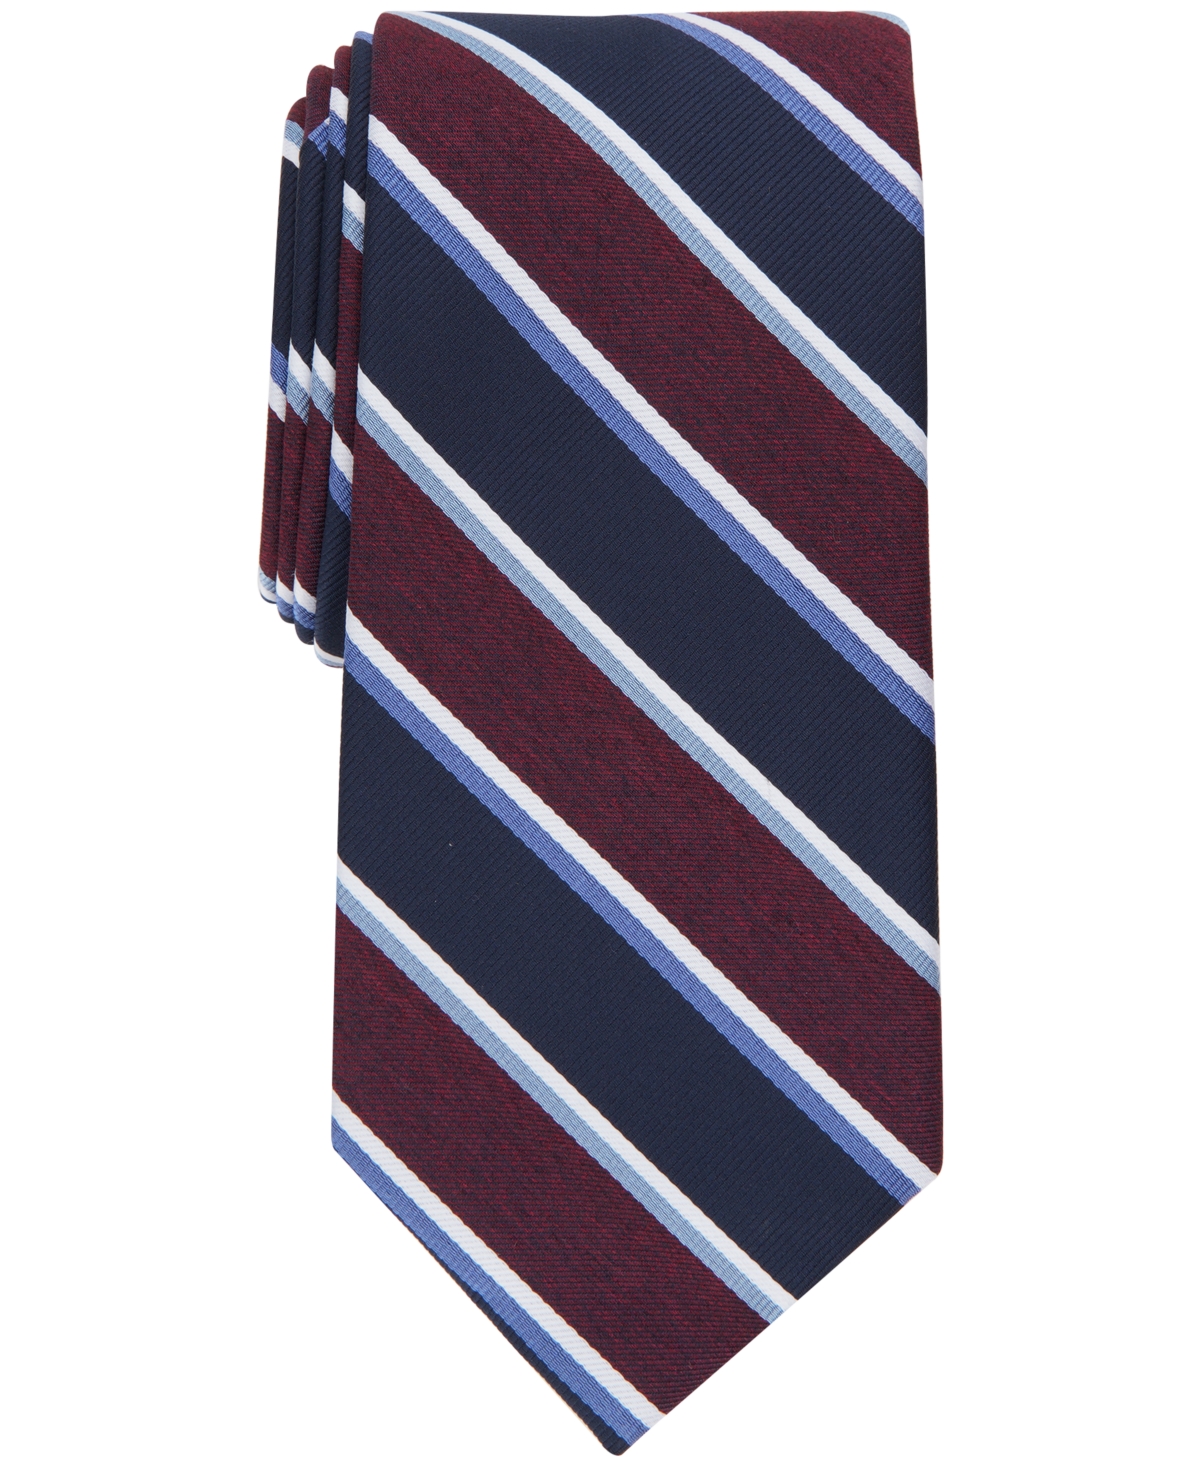 Men's Stripe Tie, Created for Macy's - Burgundy